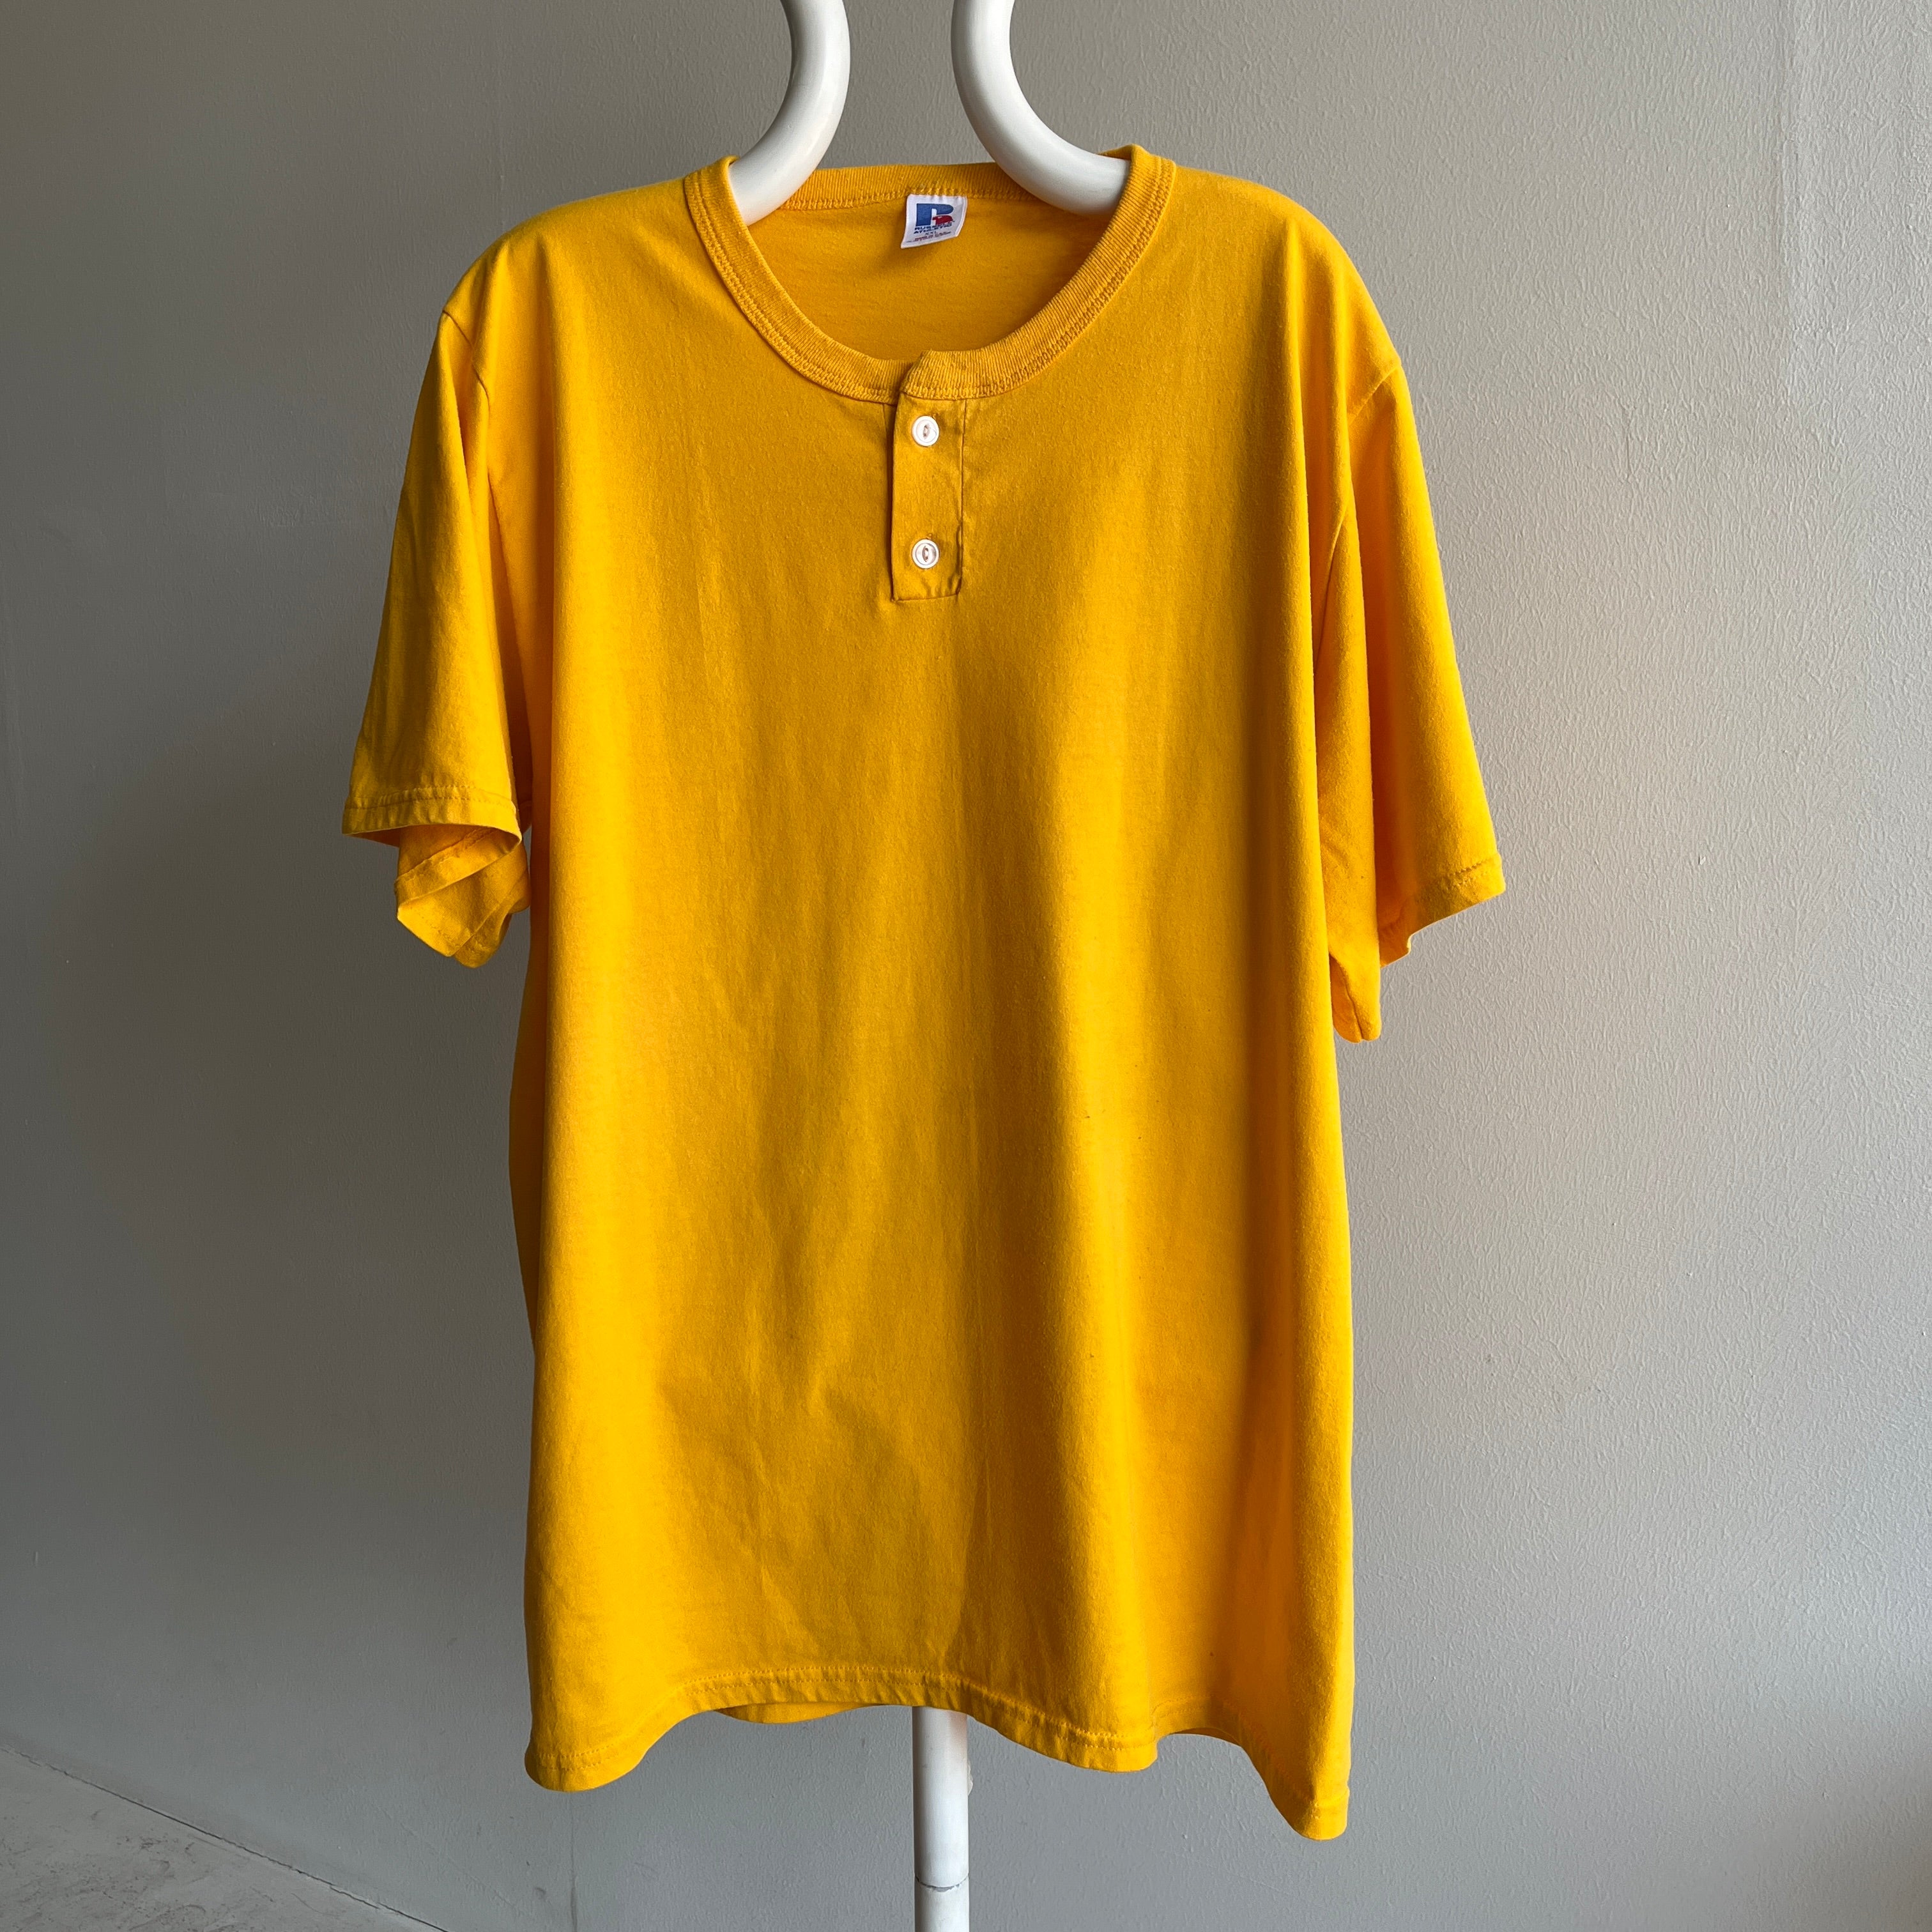 T-shirt Henley blanc Russell des années 1980 jaune soleil